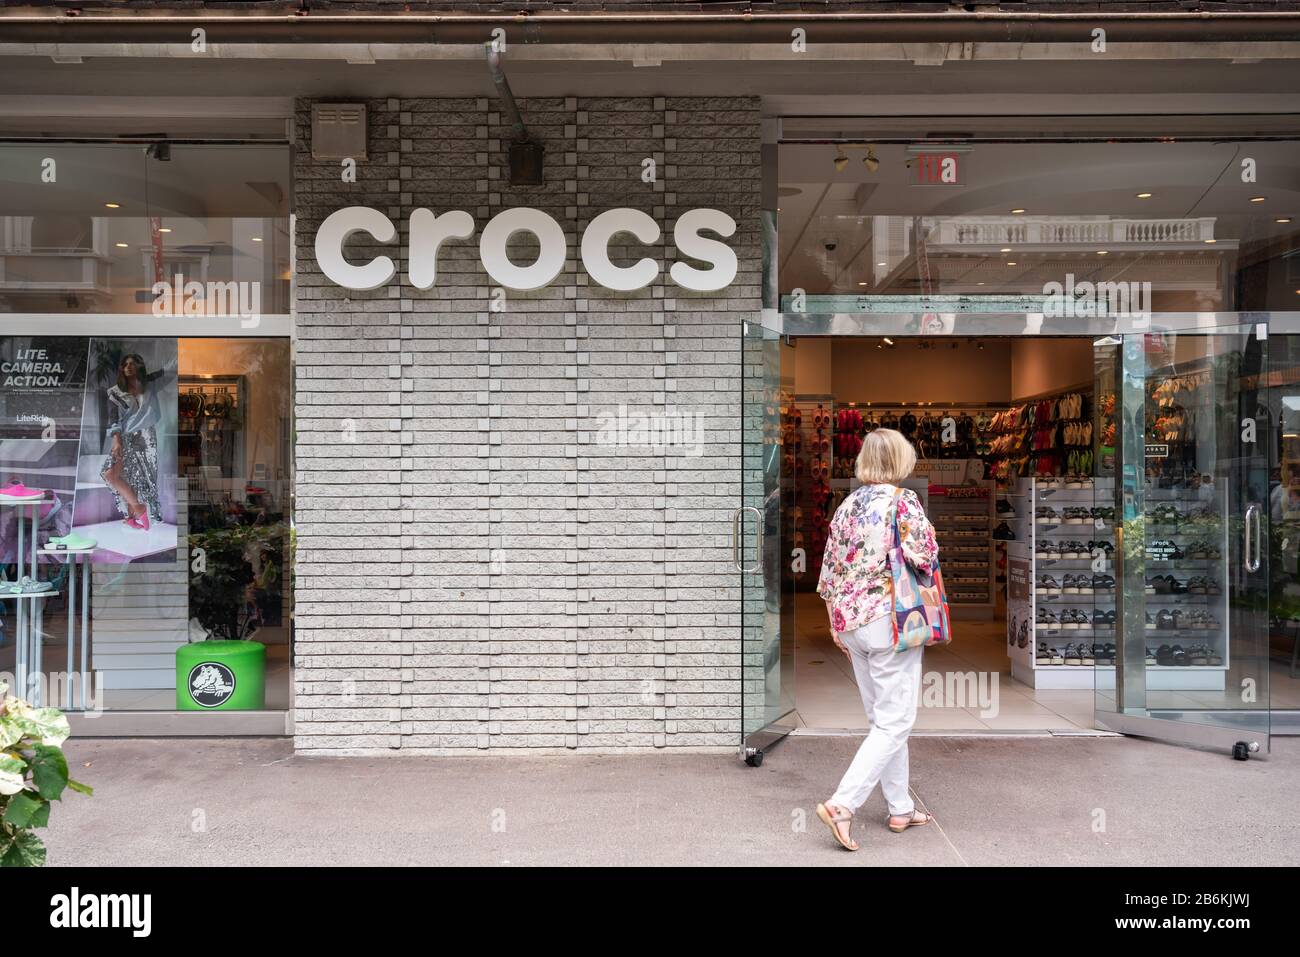 A customer walks into an american foam clog shoes company Crocs store Stock  Photo - Alamy